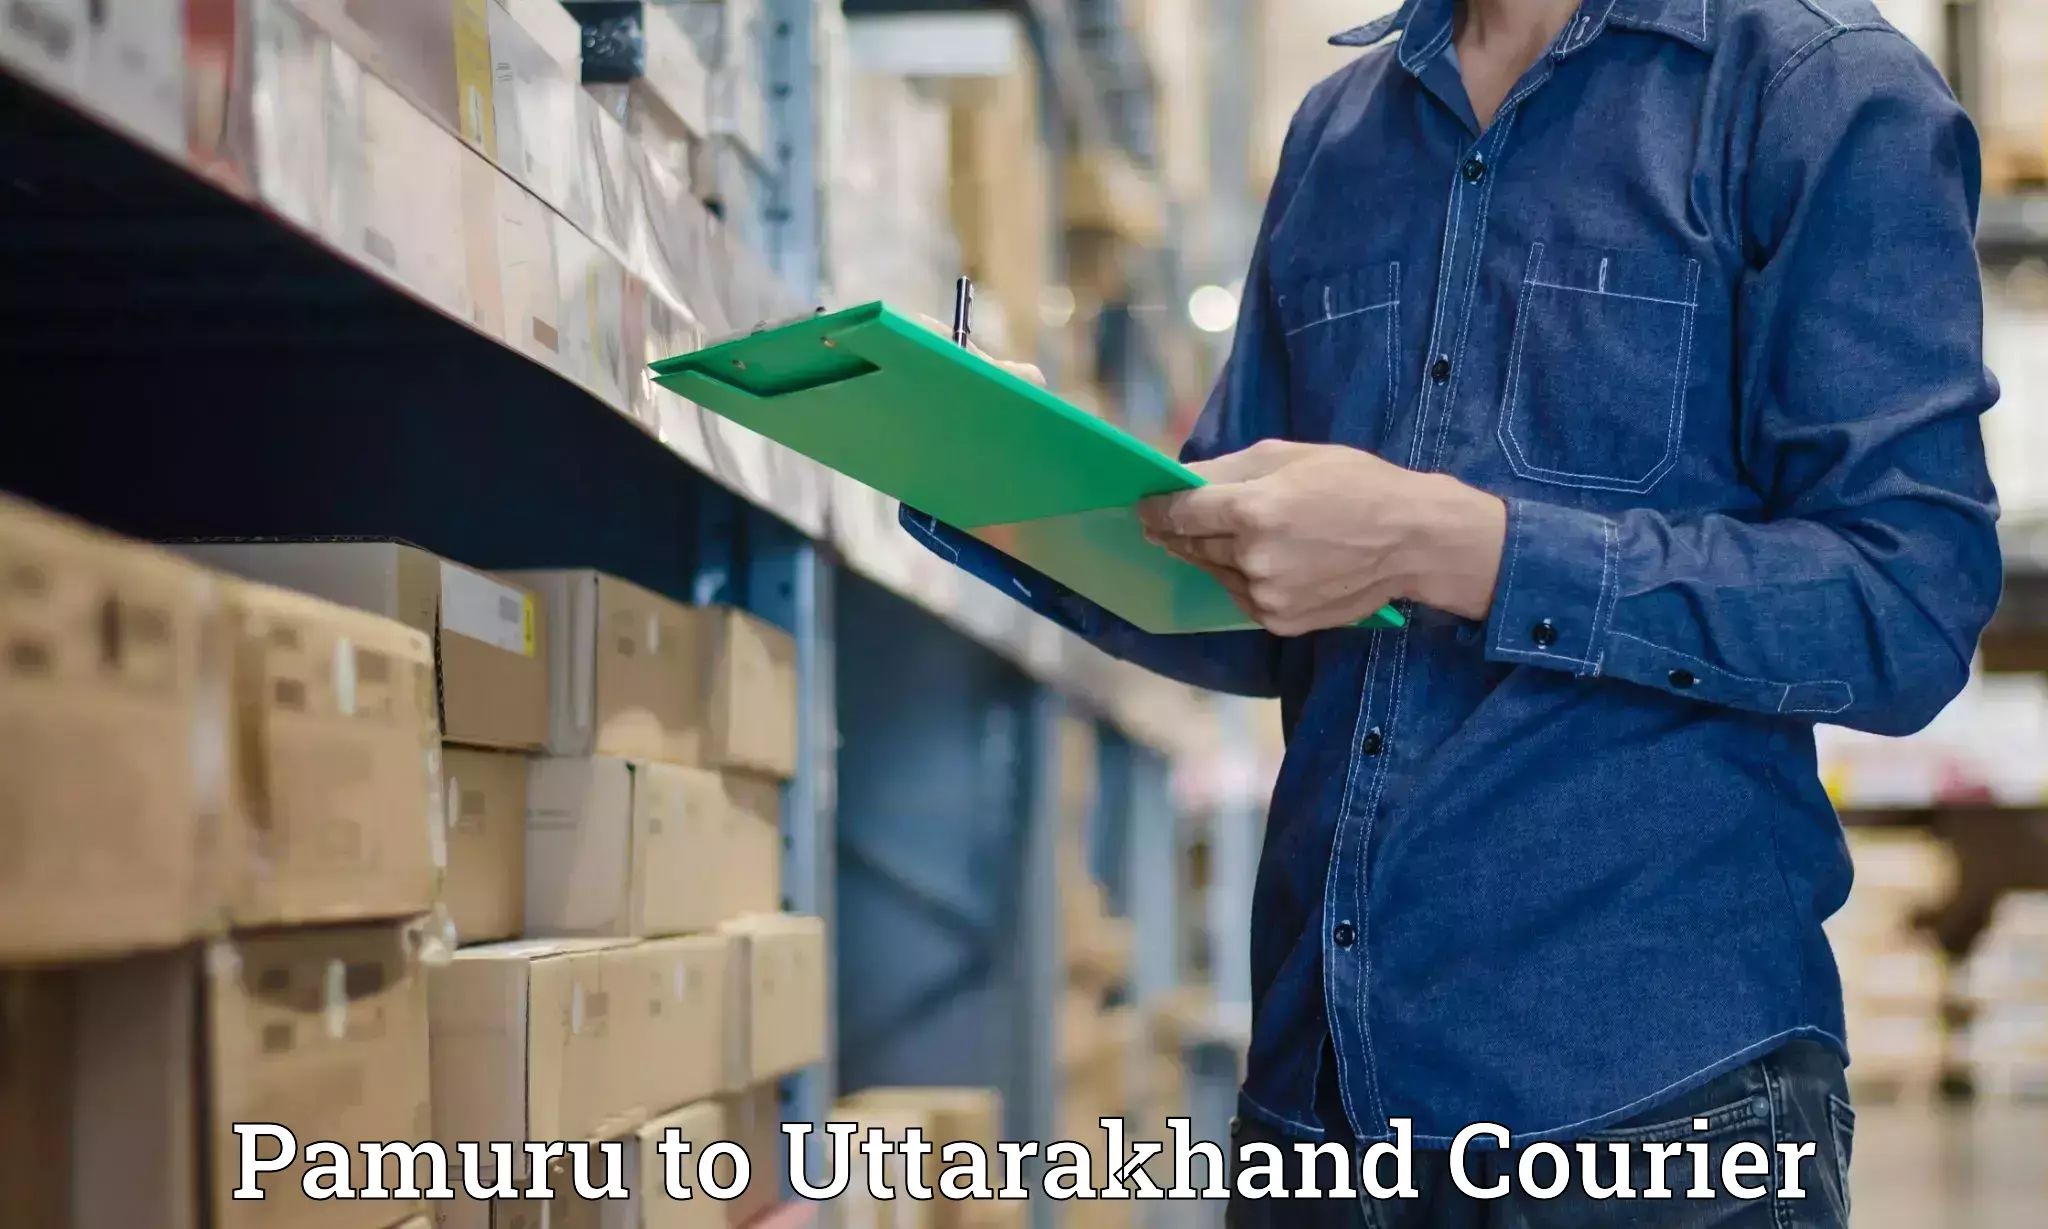 Courier service innovation Pamuru to Uttarkashi